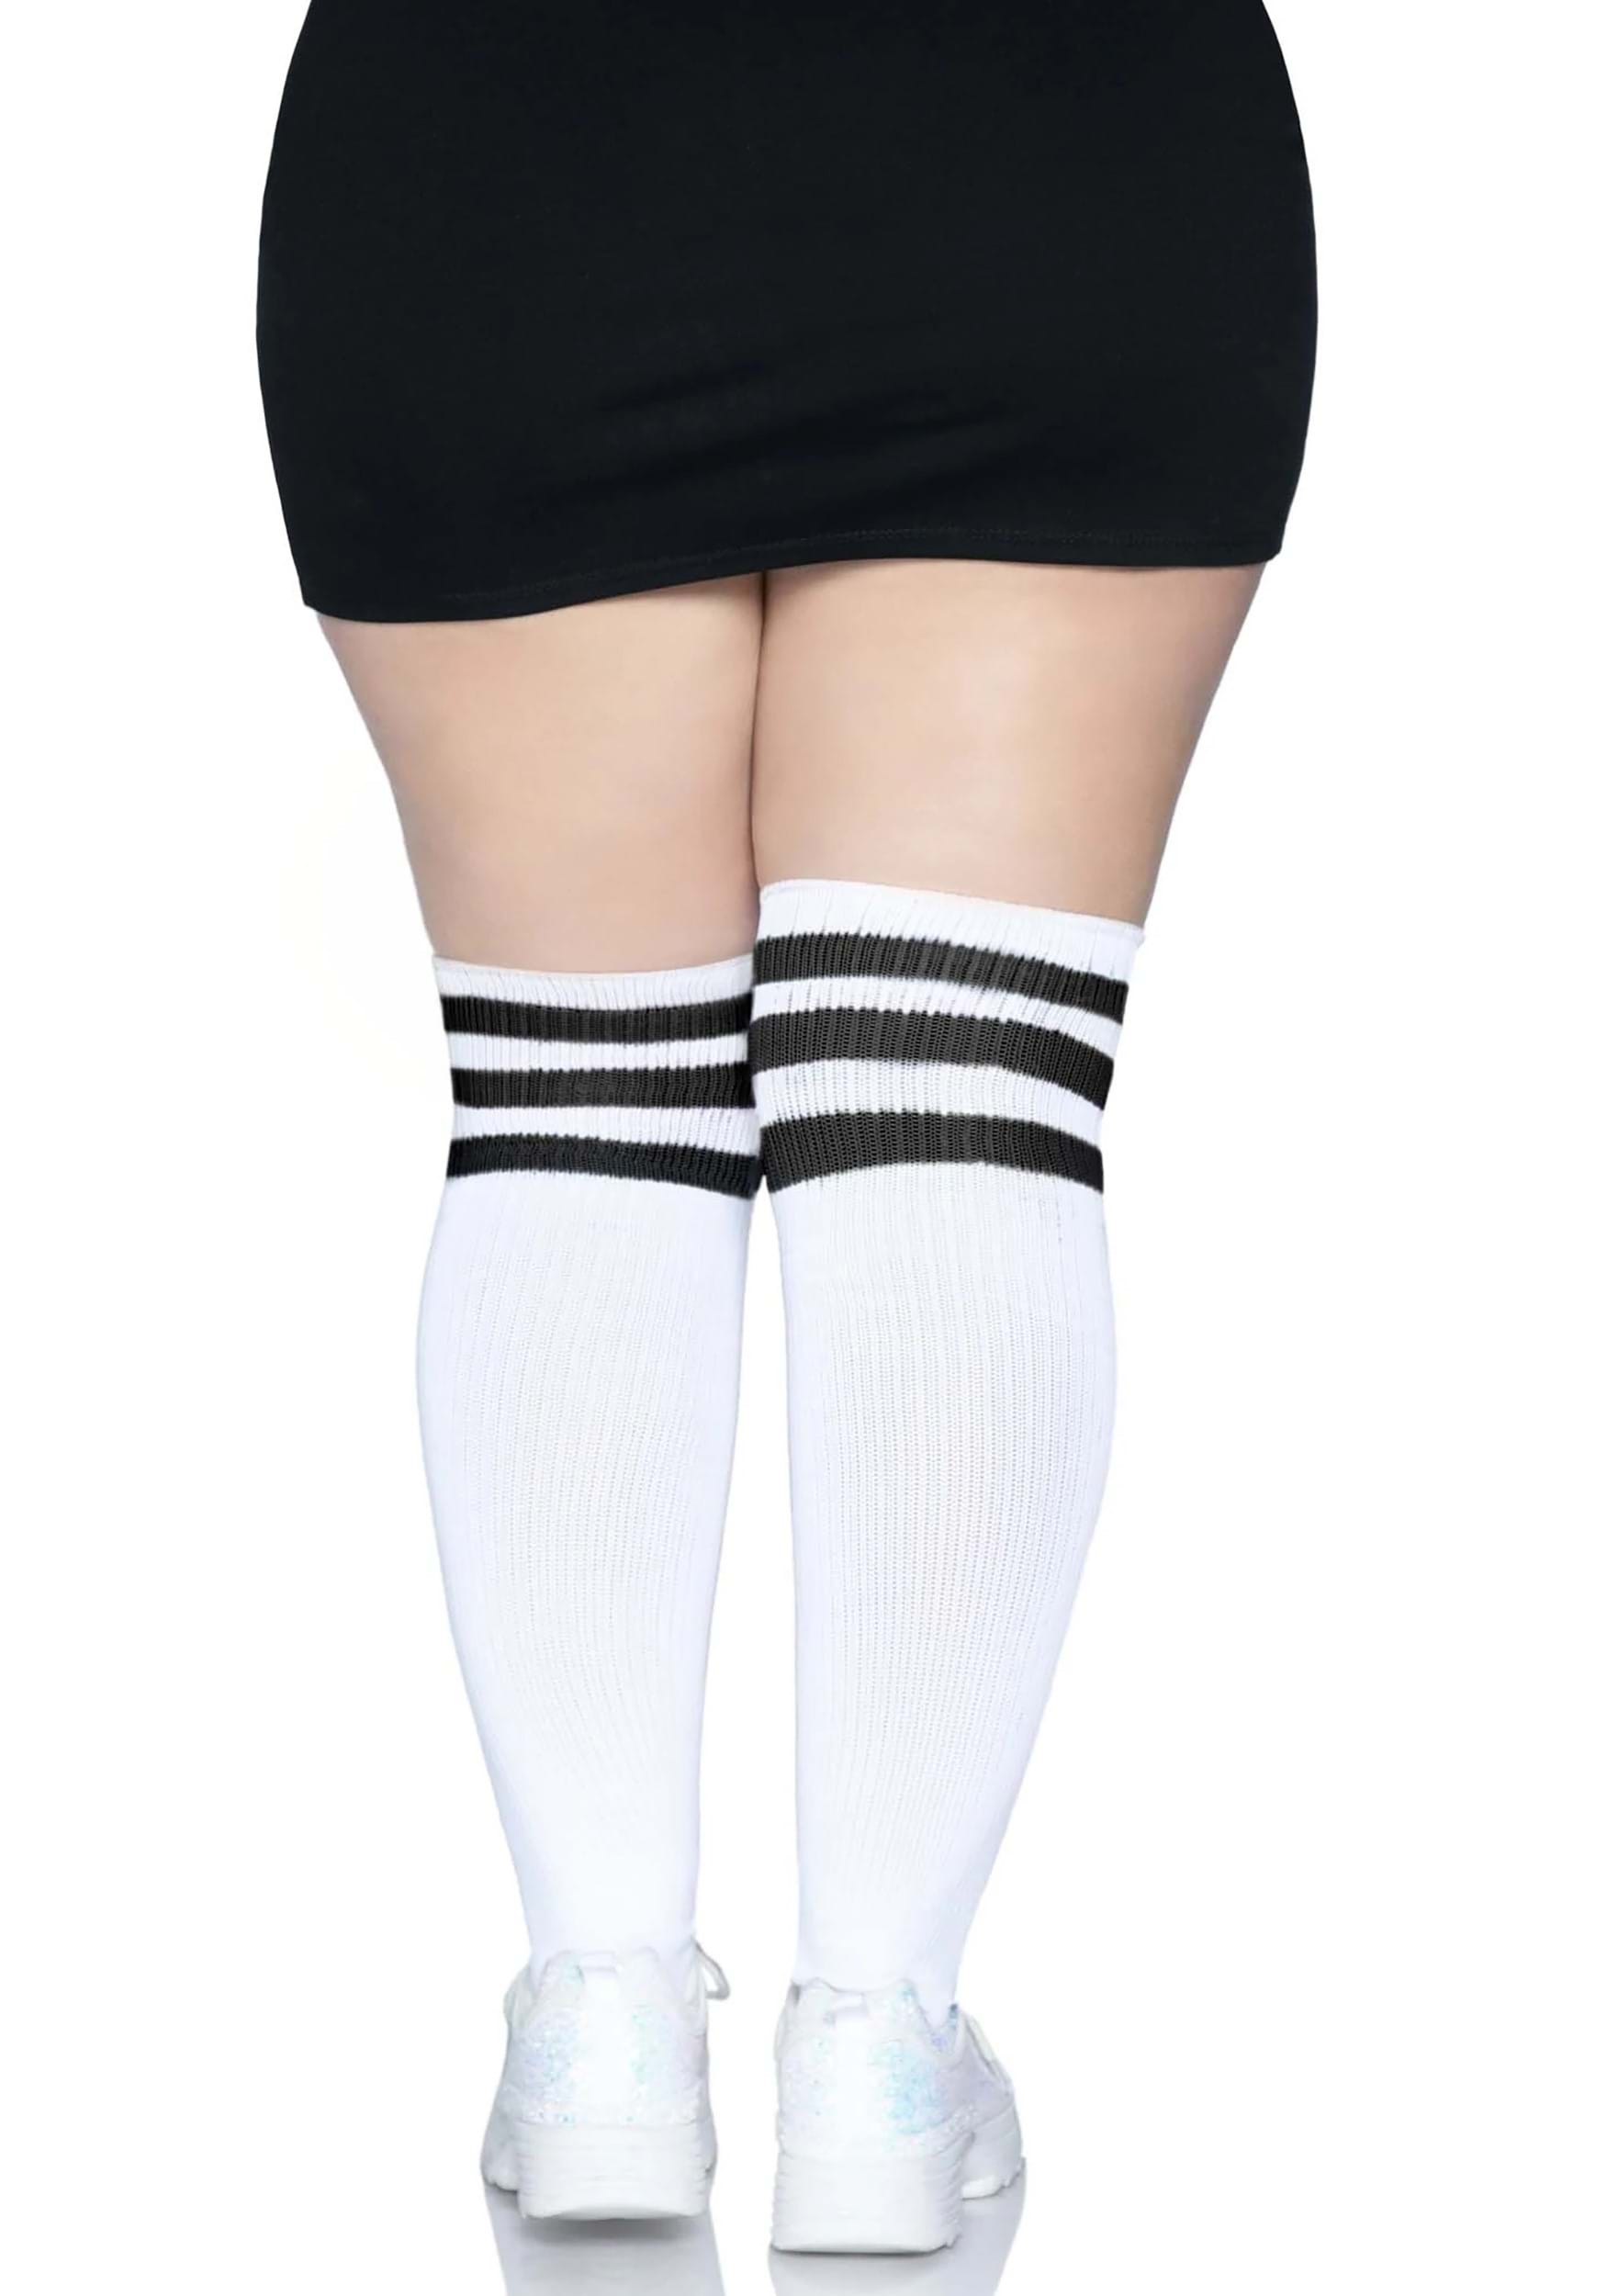 https://images.halloweencostumes.com/products/82965/2-1-221283/womens-plus-white-athletic-socks-with-black-stripe-alt-1.jpg